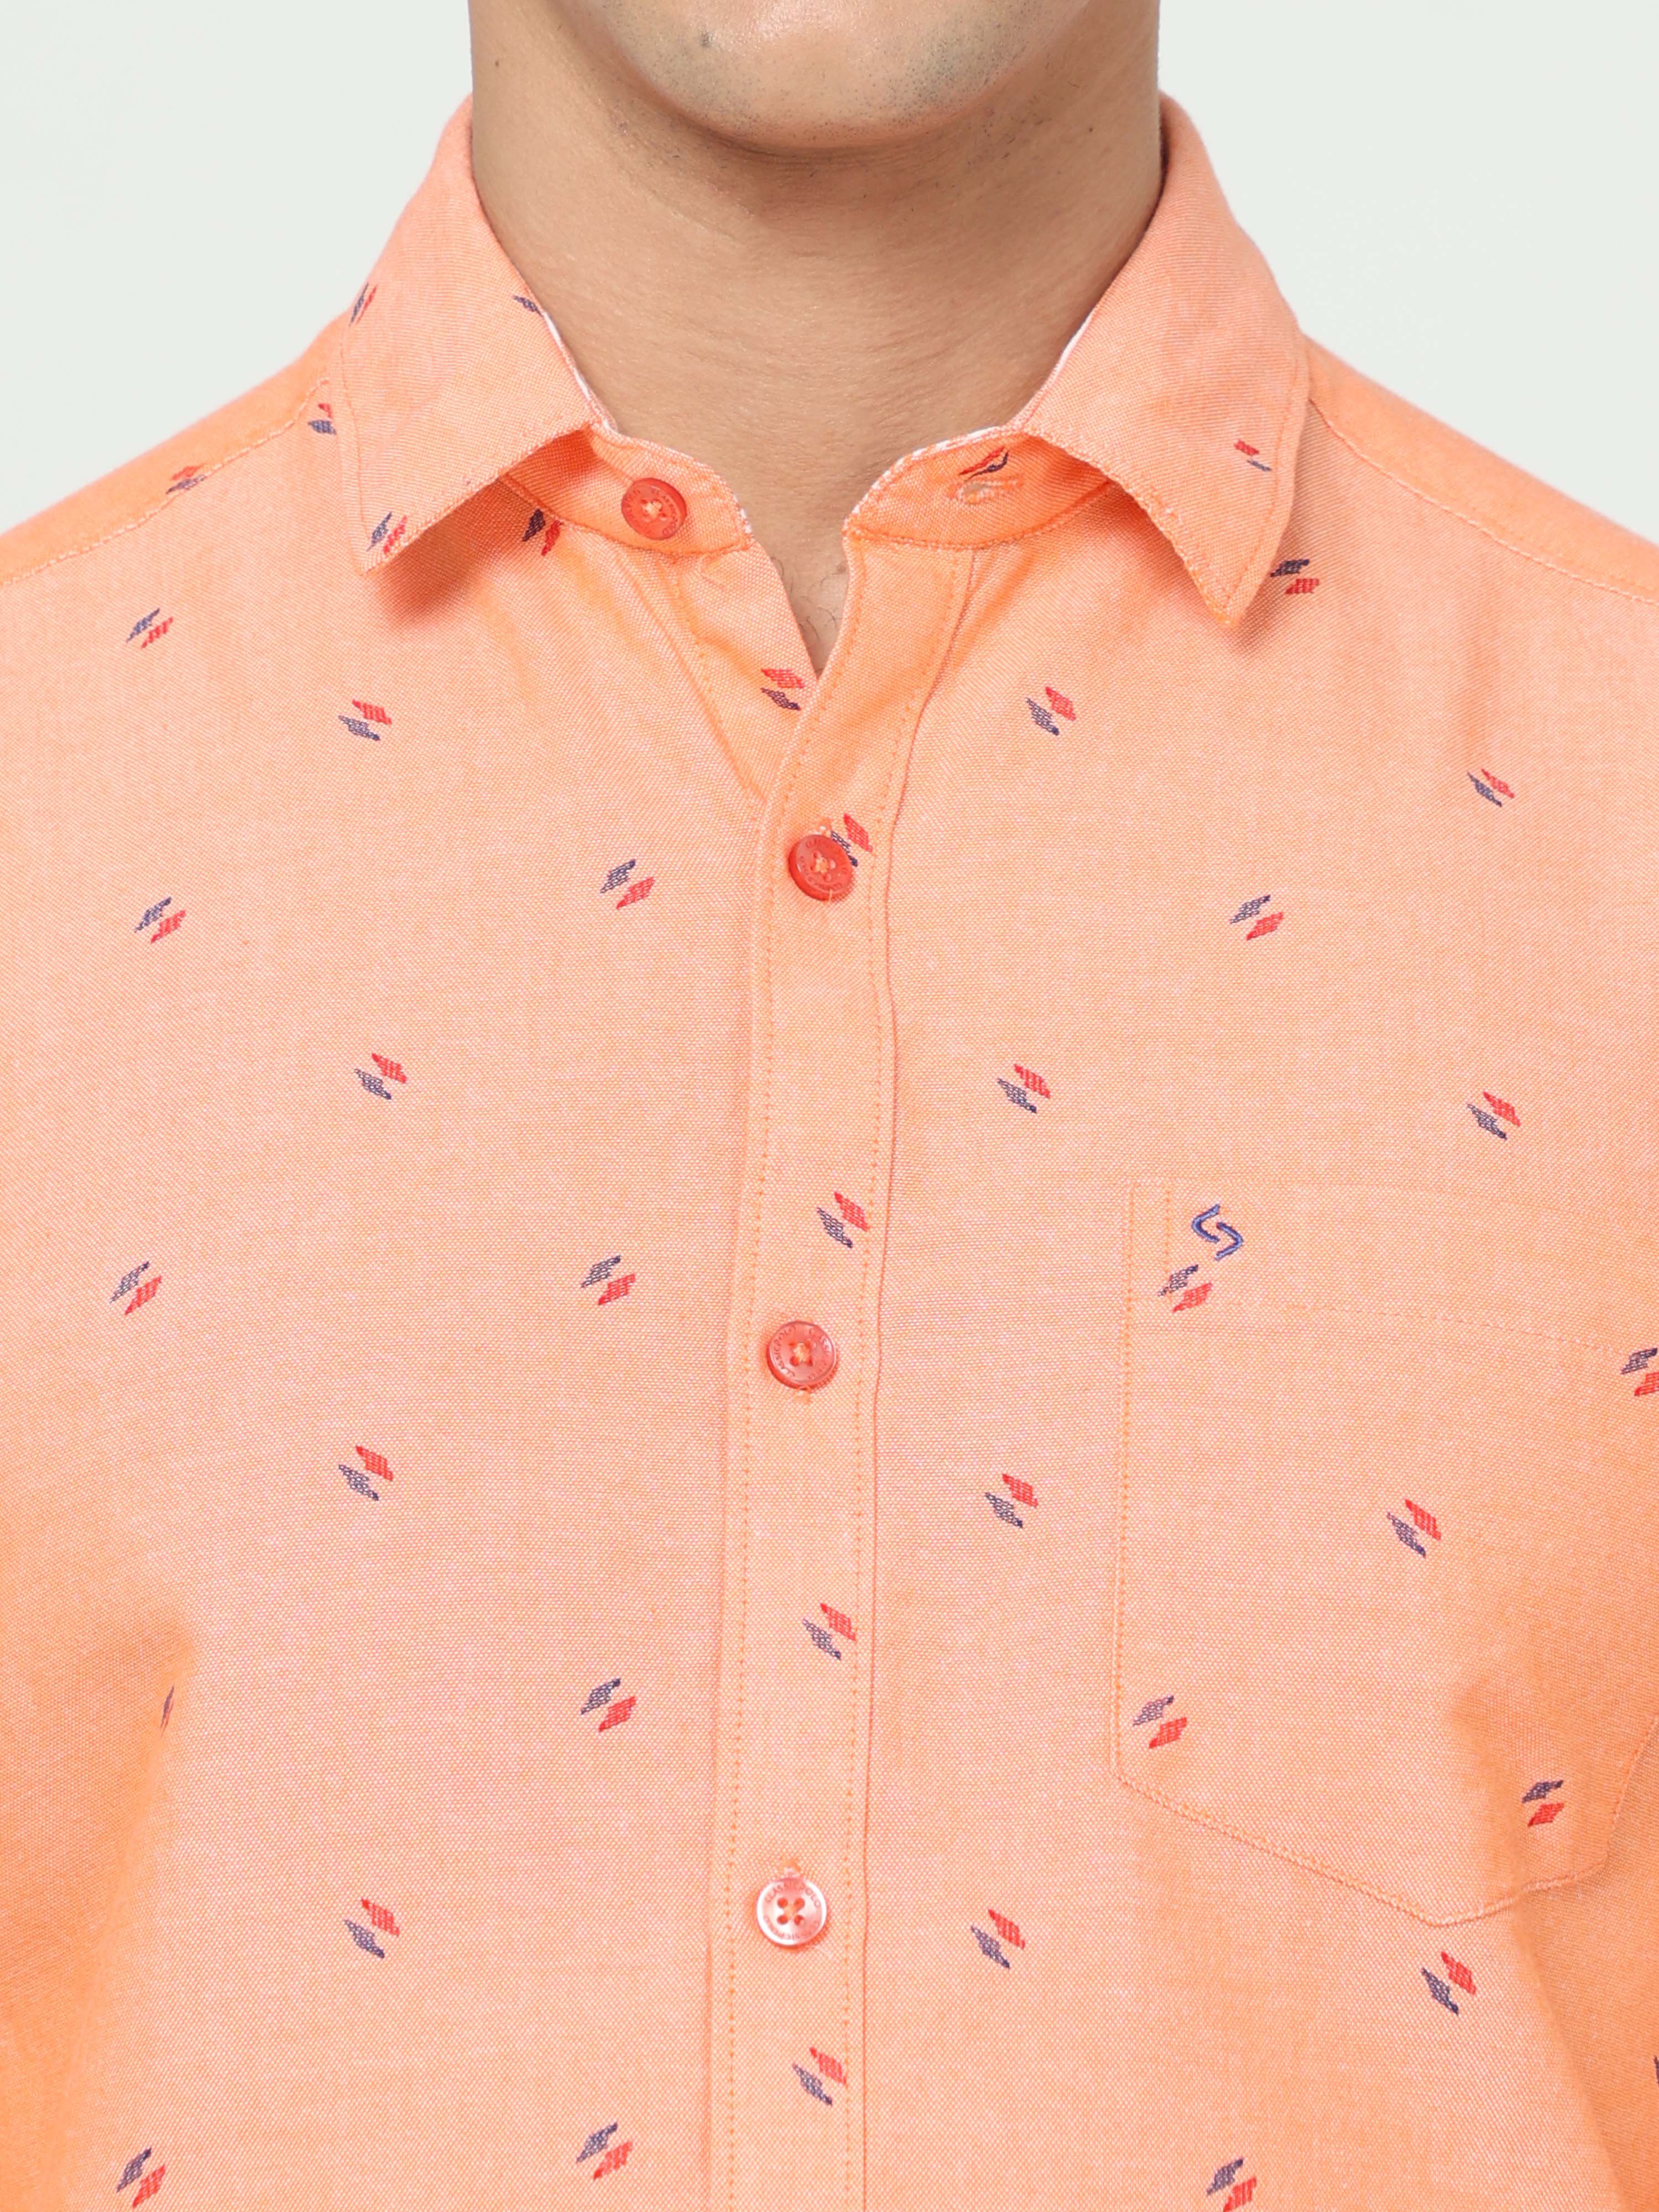 Classic Polo Mens Cotton Full Sleeve Printed Slim Fit Polo Neck Orange Color Woven Shirt | SO1-177 B-FS-PRT